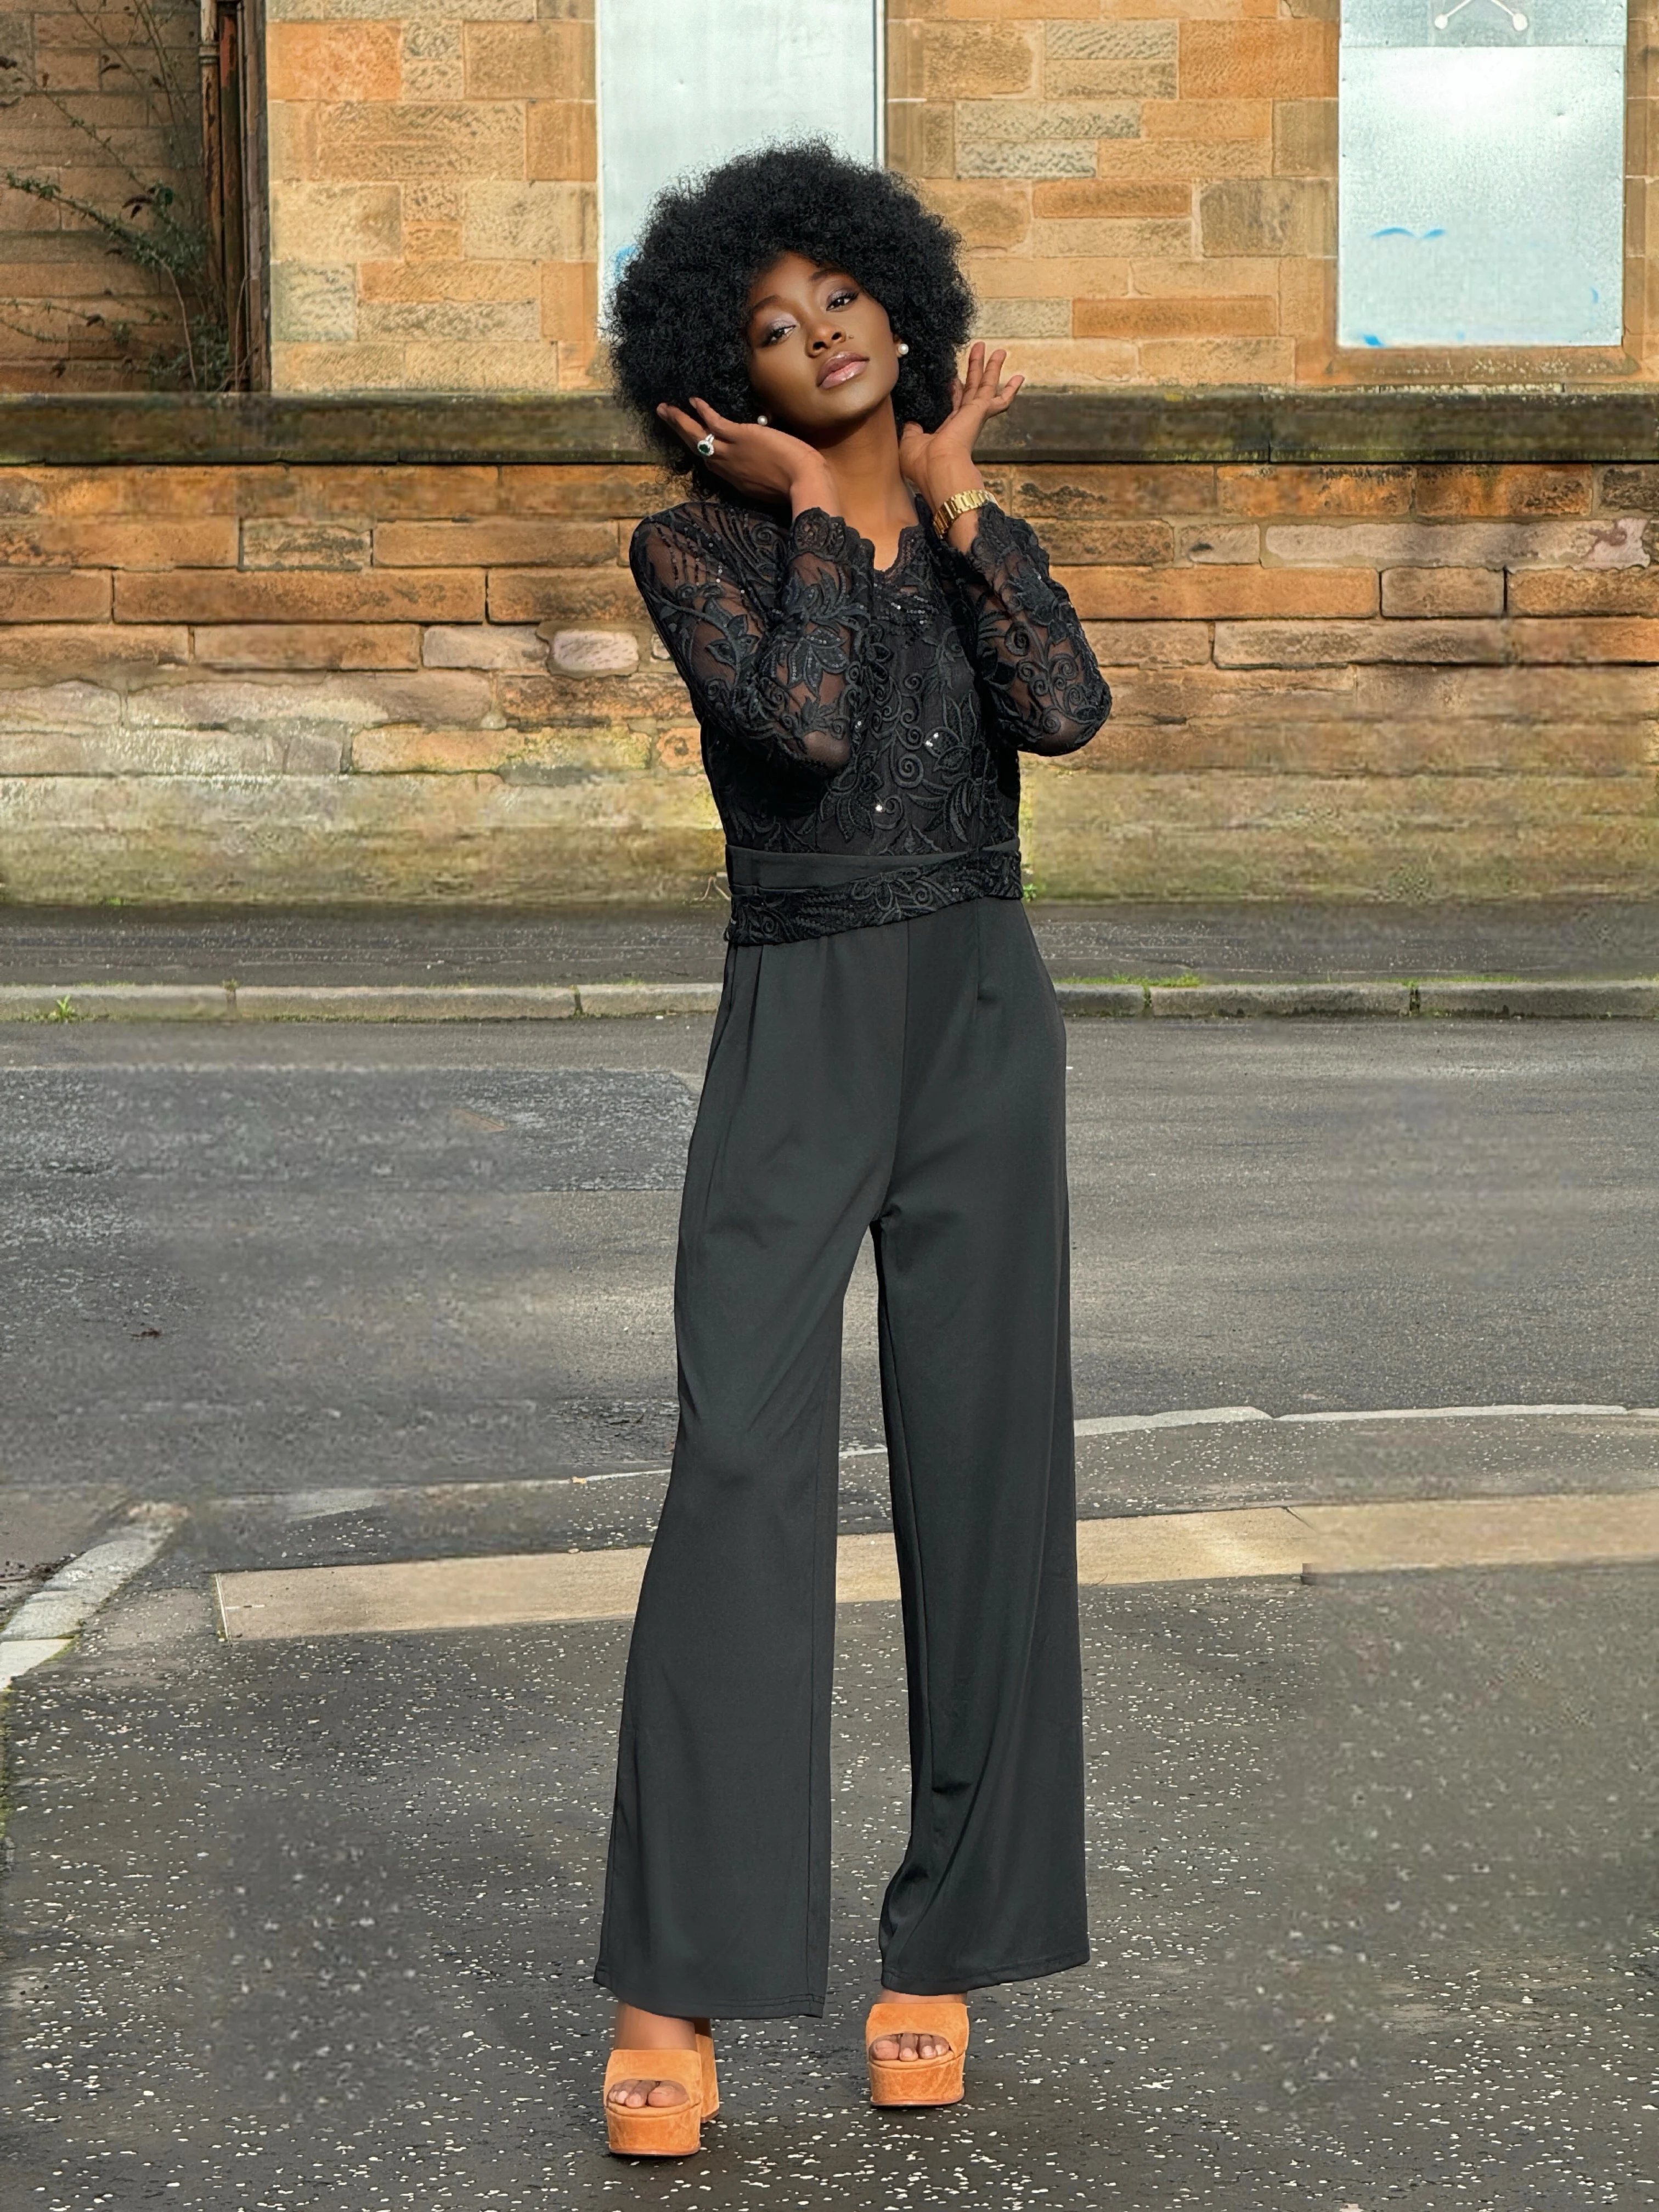 Fashion Blogger wearing a black jumpsuit